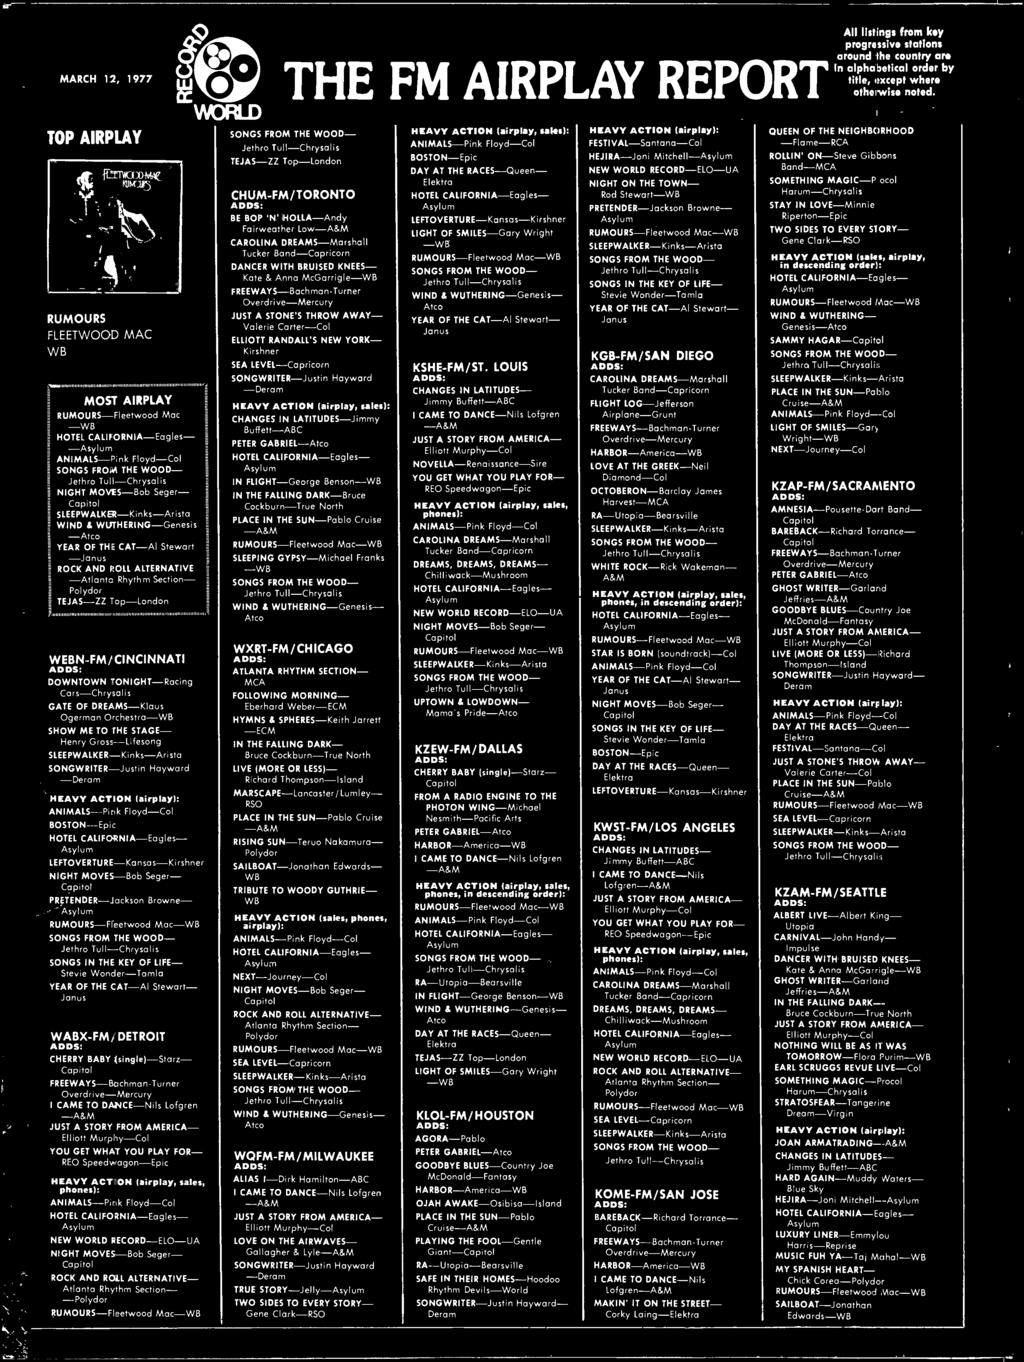 SLEEPWALKER-Kinks-Arista WIND & WUTHERING-Genesis -Atco YEAR O THE CAT-Al Stewart E -Janus _ ROCK AND ROLL ALTERNATIVE -Atlanta Rhythm Section- Polydor TEJAS-ZZ Top-London WEBN-M/CINCINNATI ADDS: